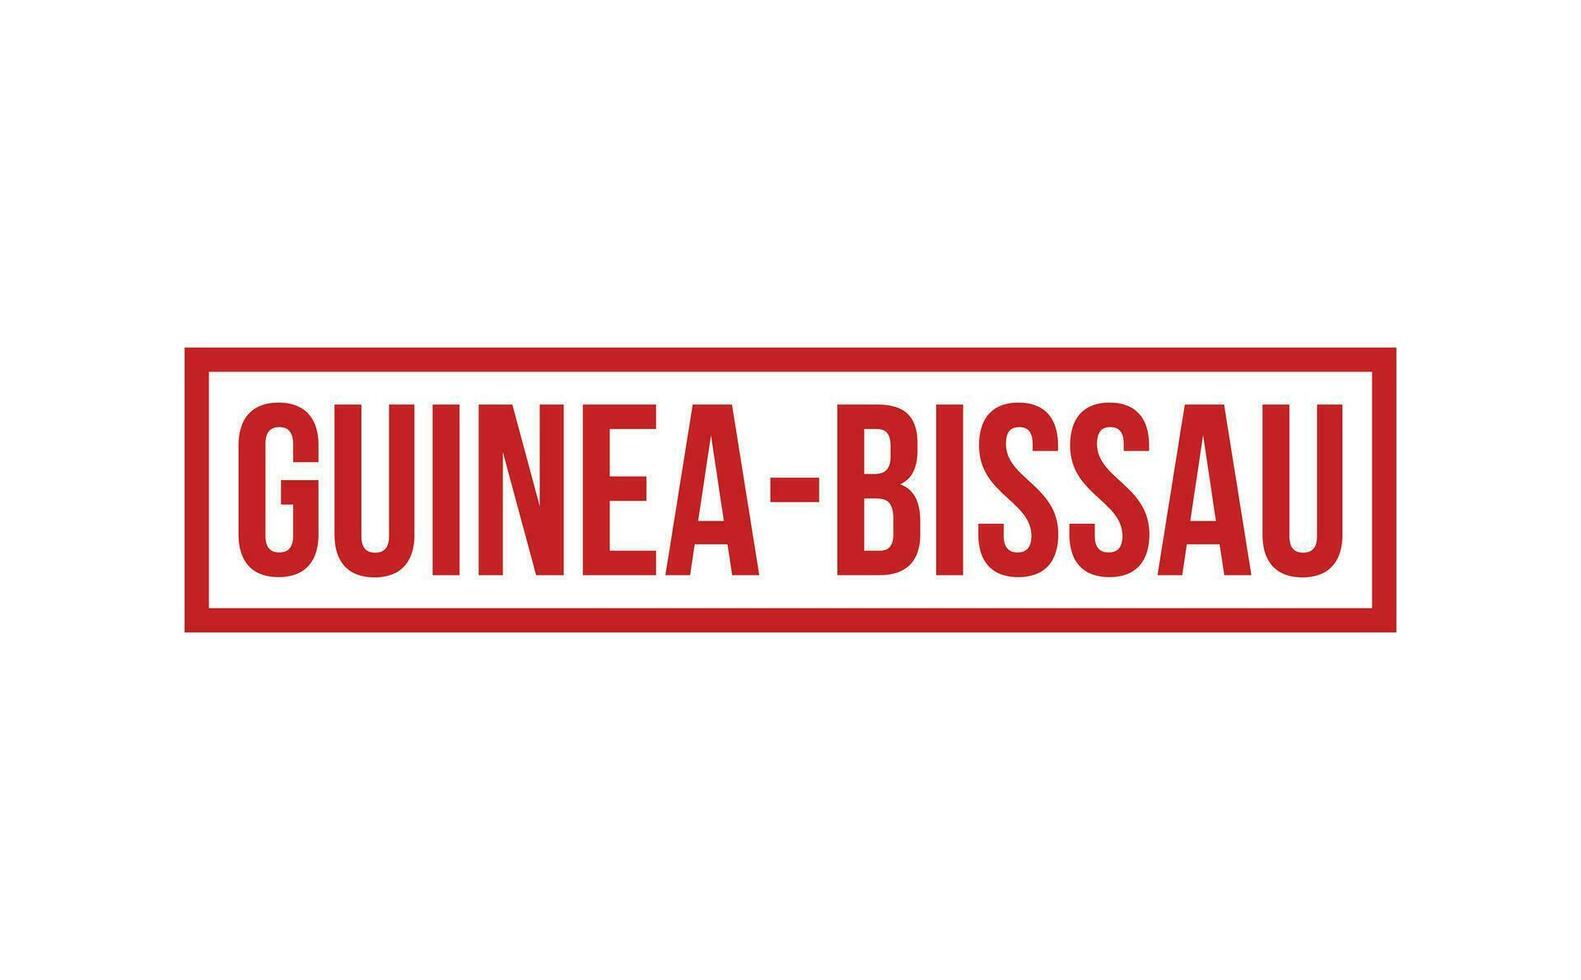 Guinea Bissau Rubber Stamp Seal Vector